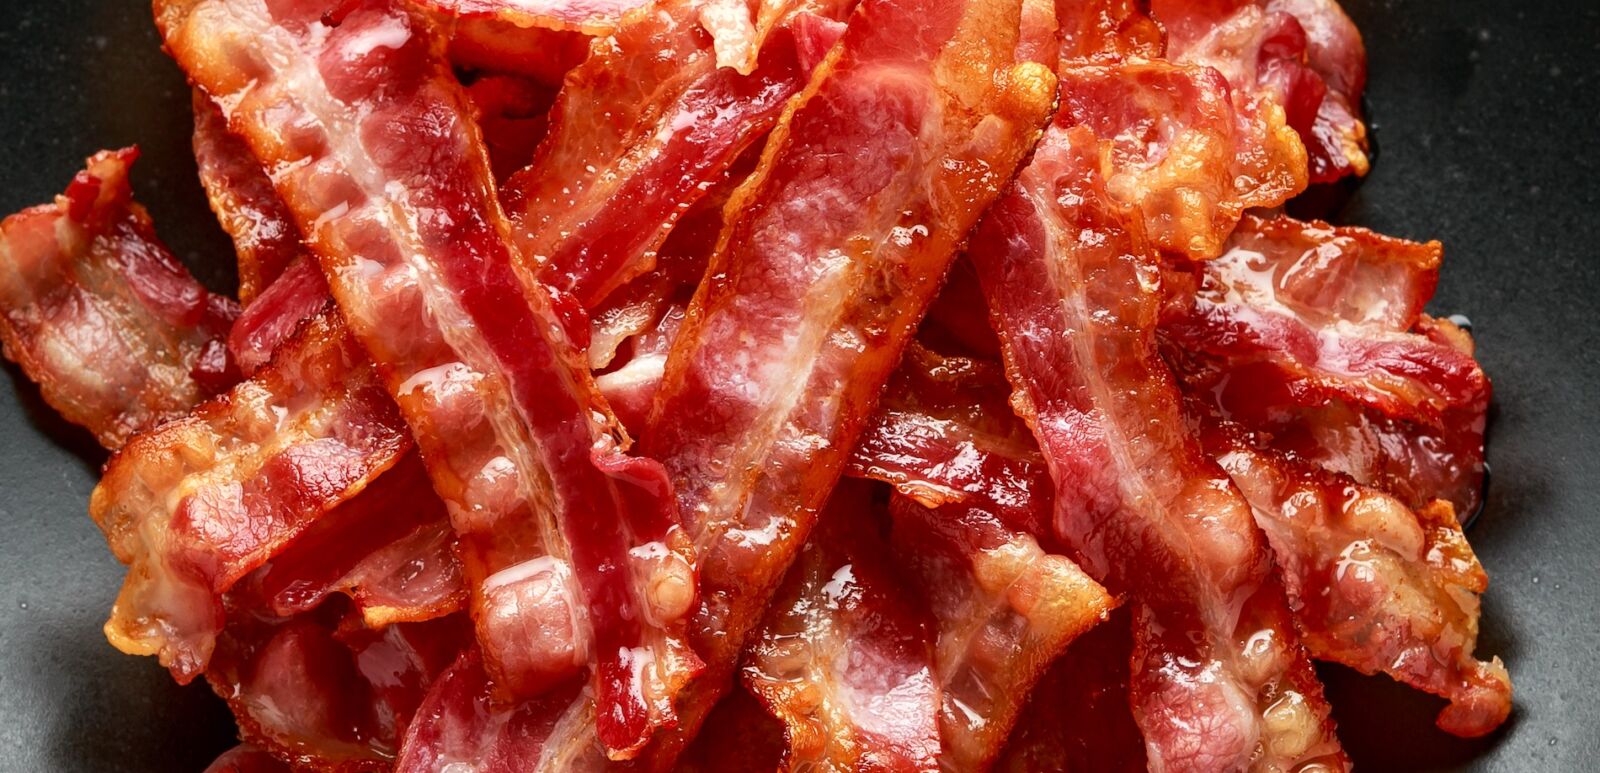 Bacon. Photo via Shutterstock.